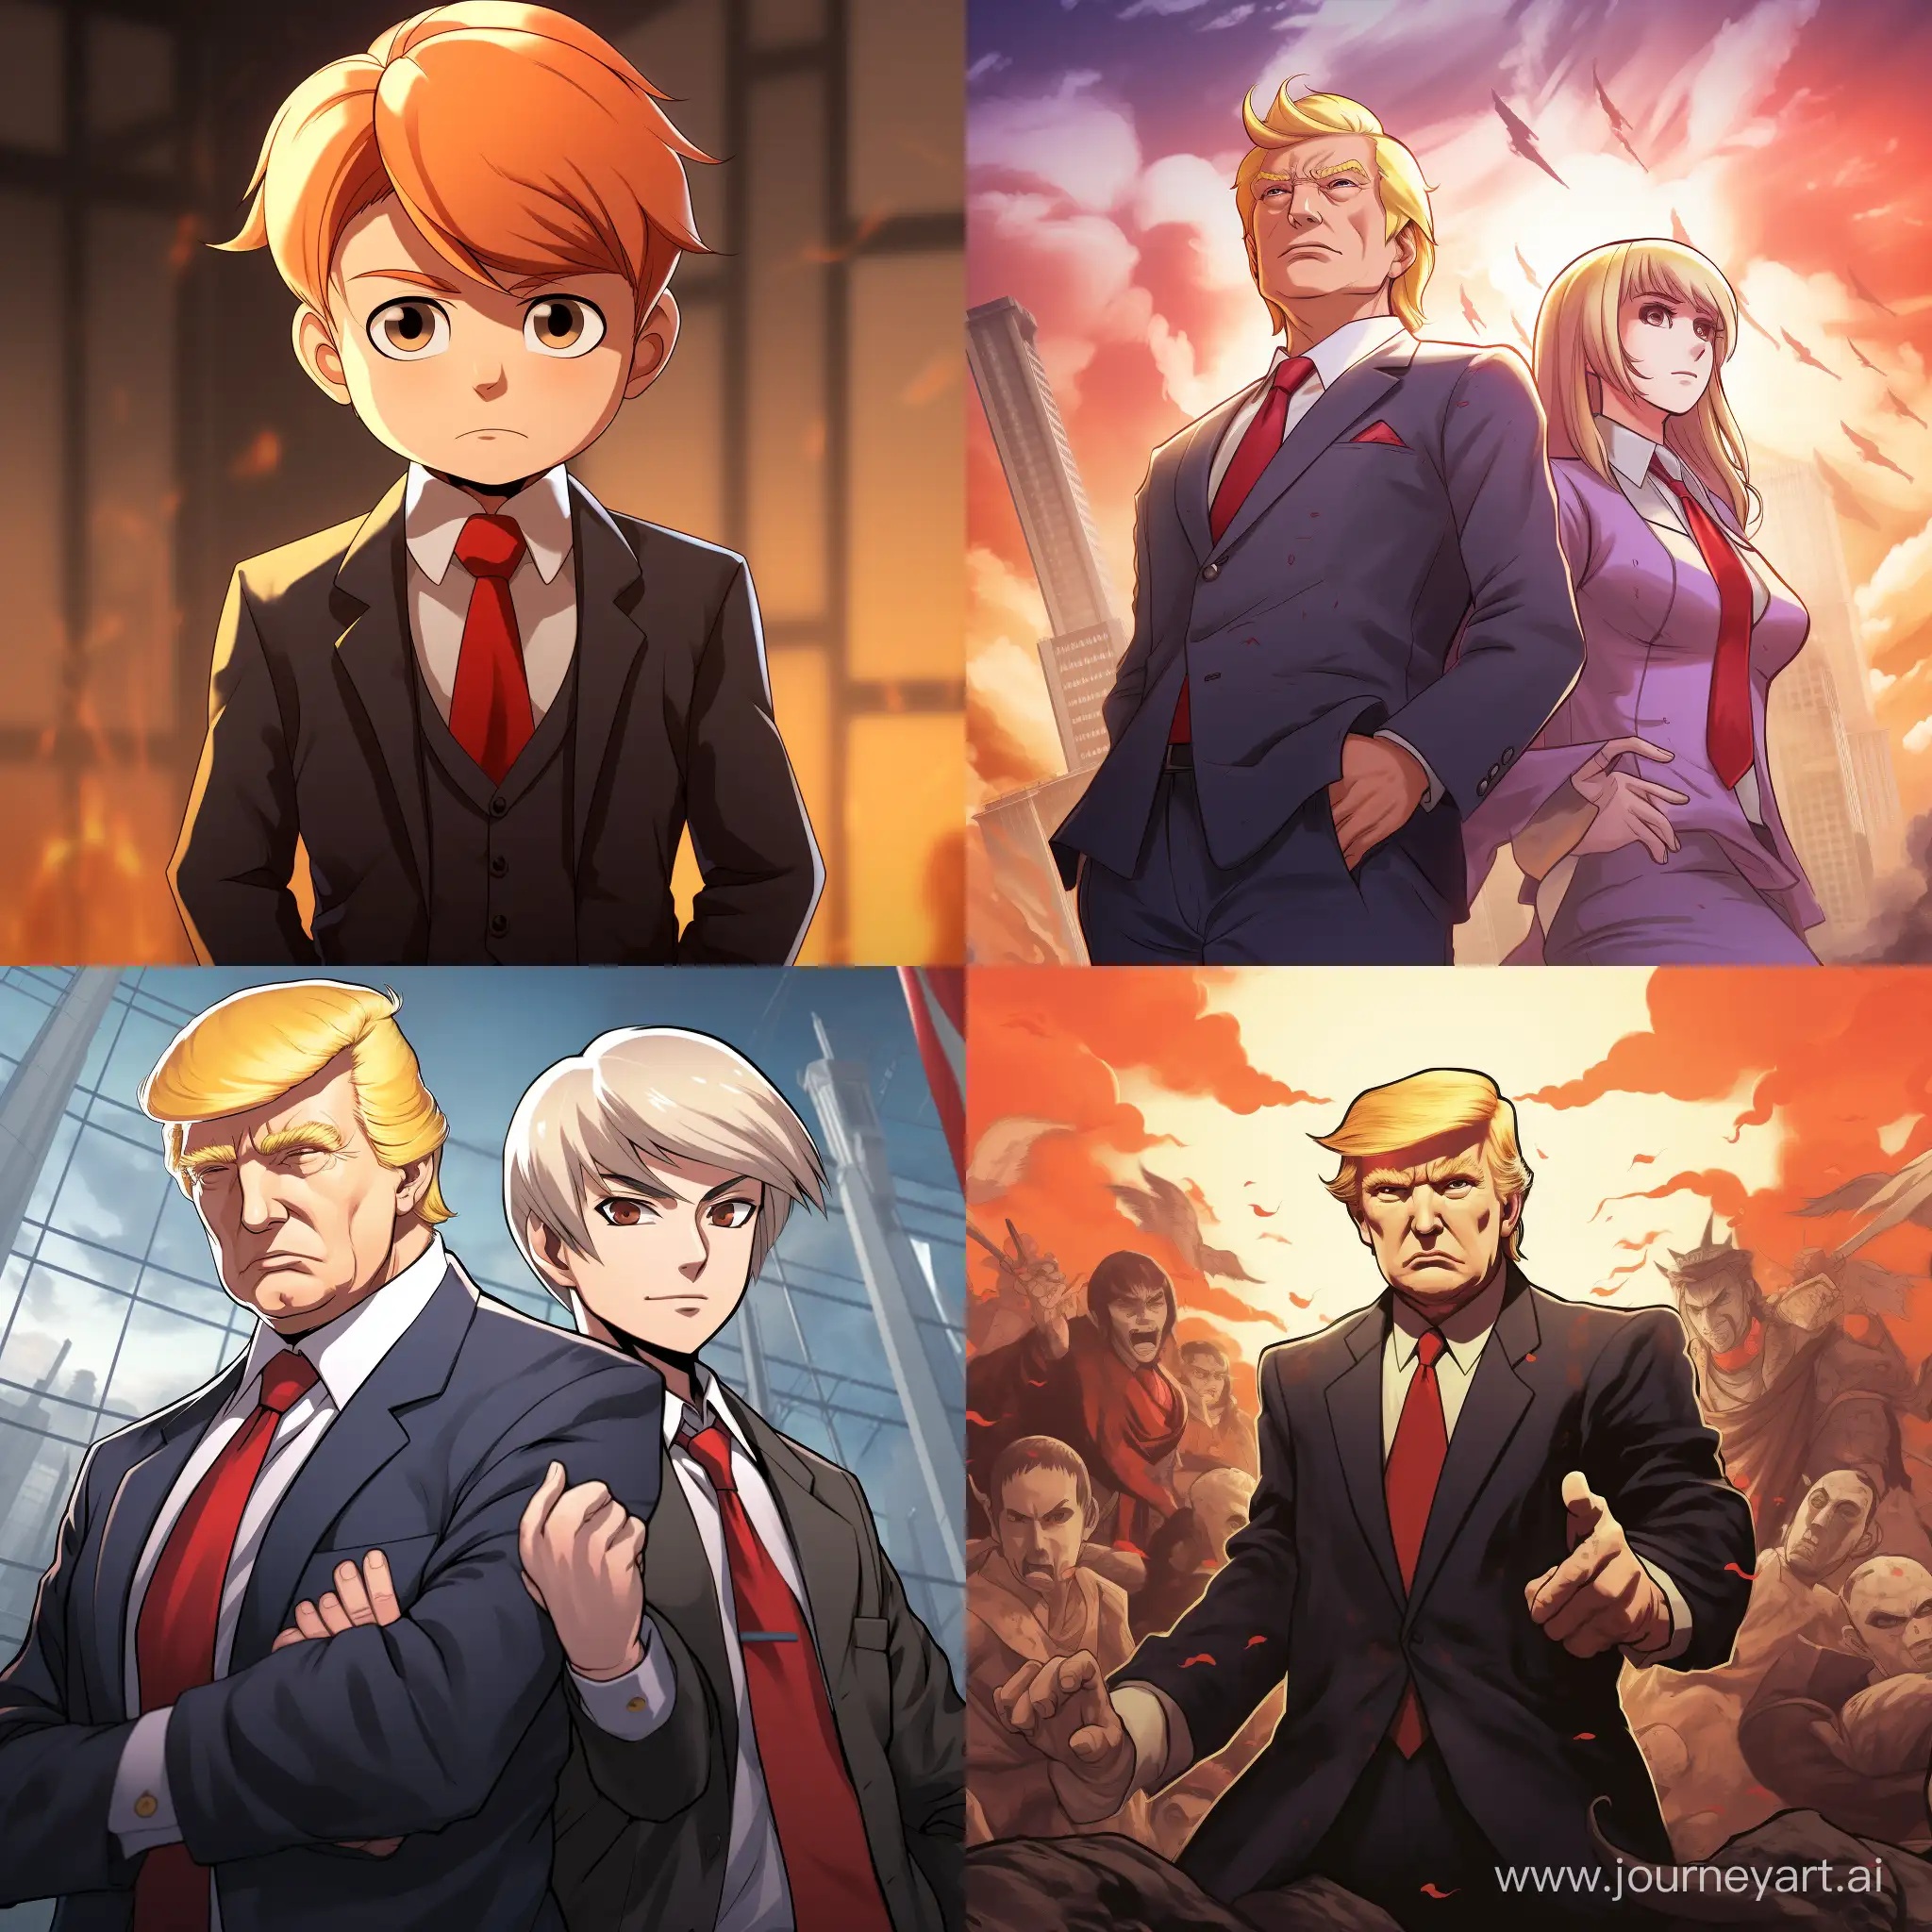 Animestyle-Portrait-of-Trump-with-Aspect-Ratio-11-Artistic-Digital-Illustration